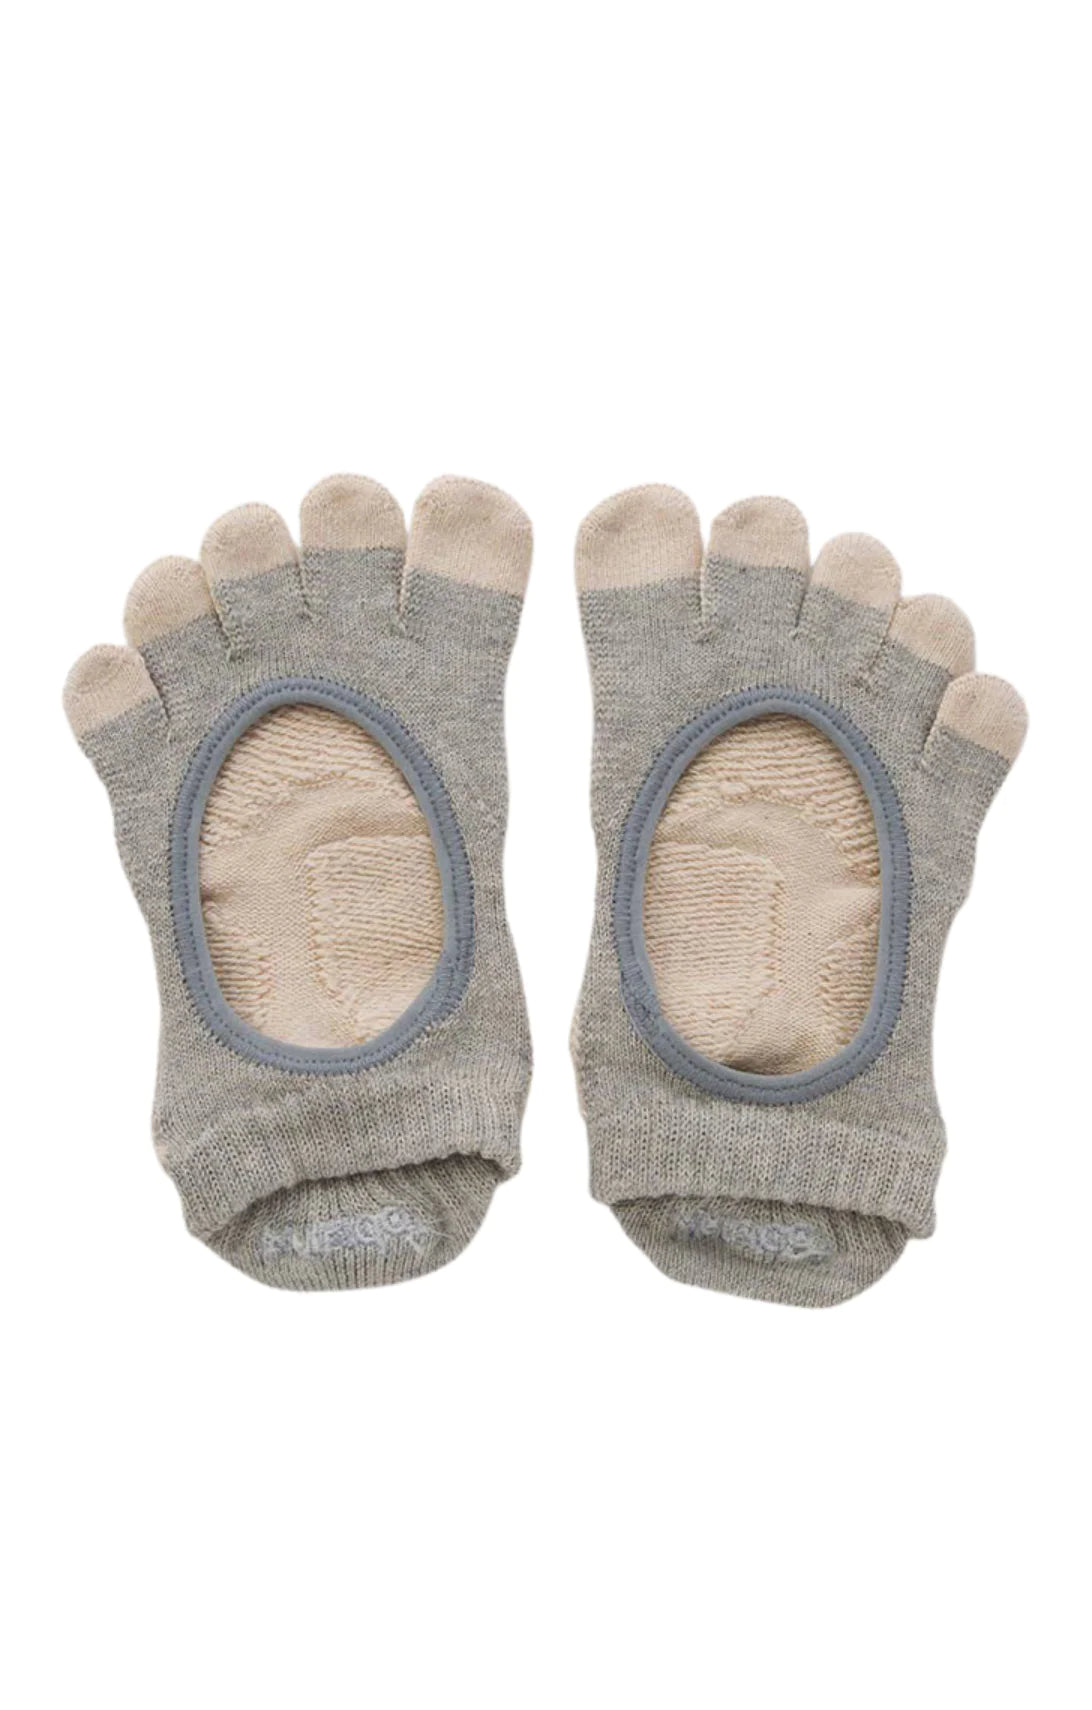 Knitido plus Botanical Dyed Footie *Grip+Power Pads* Grip Socks in Light Grey